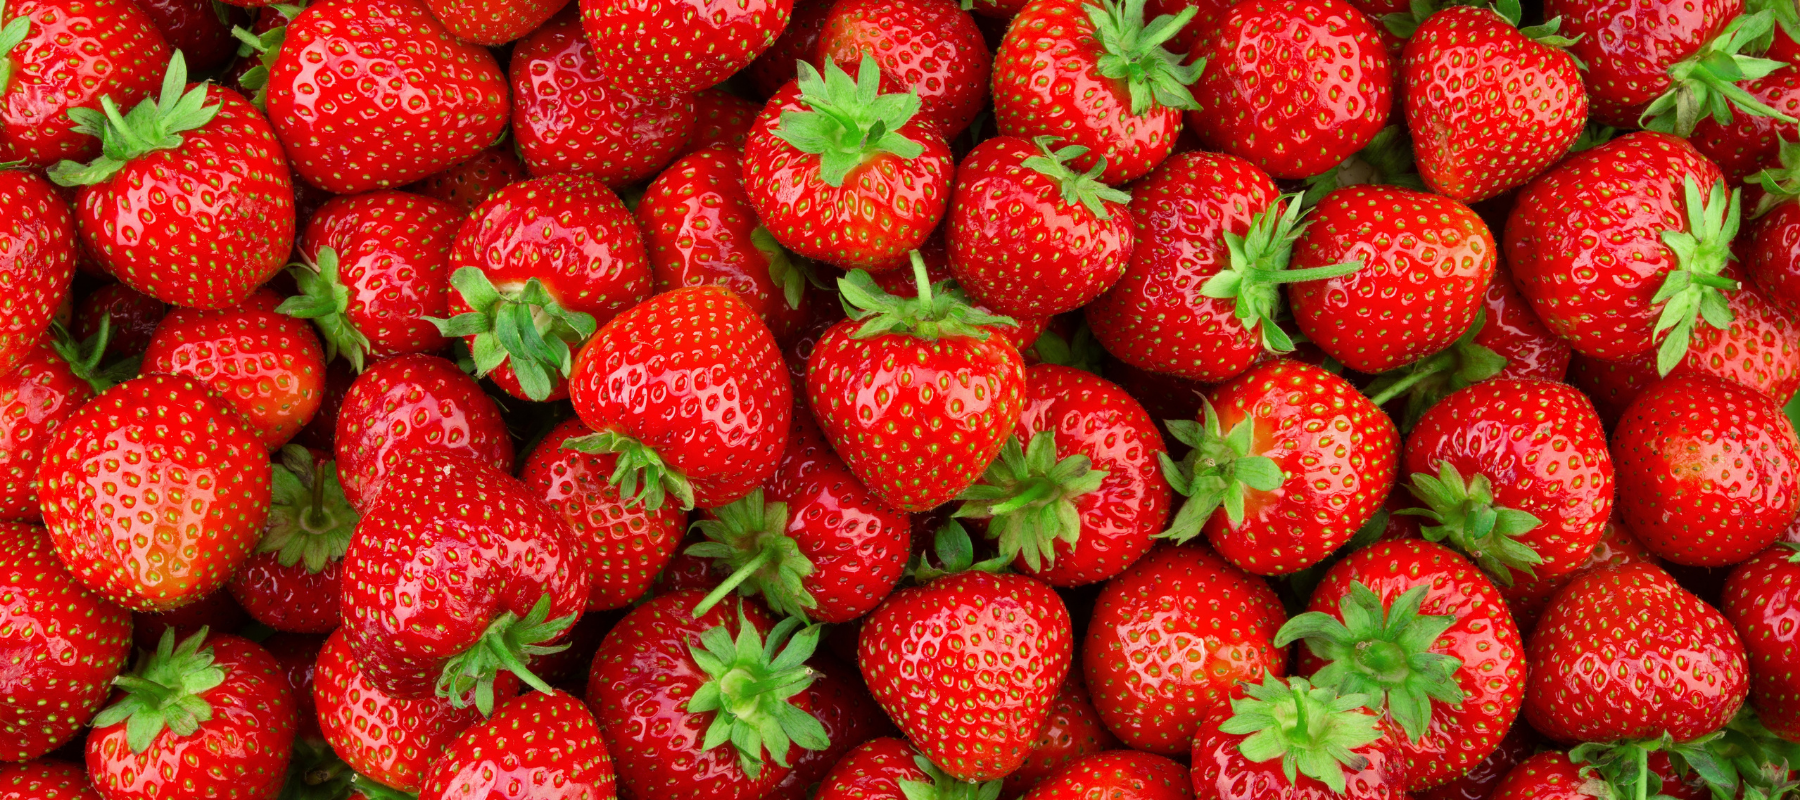 Tips on Growing Strawberries